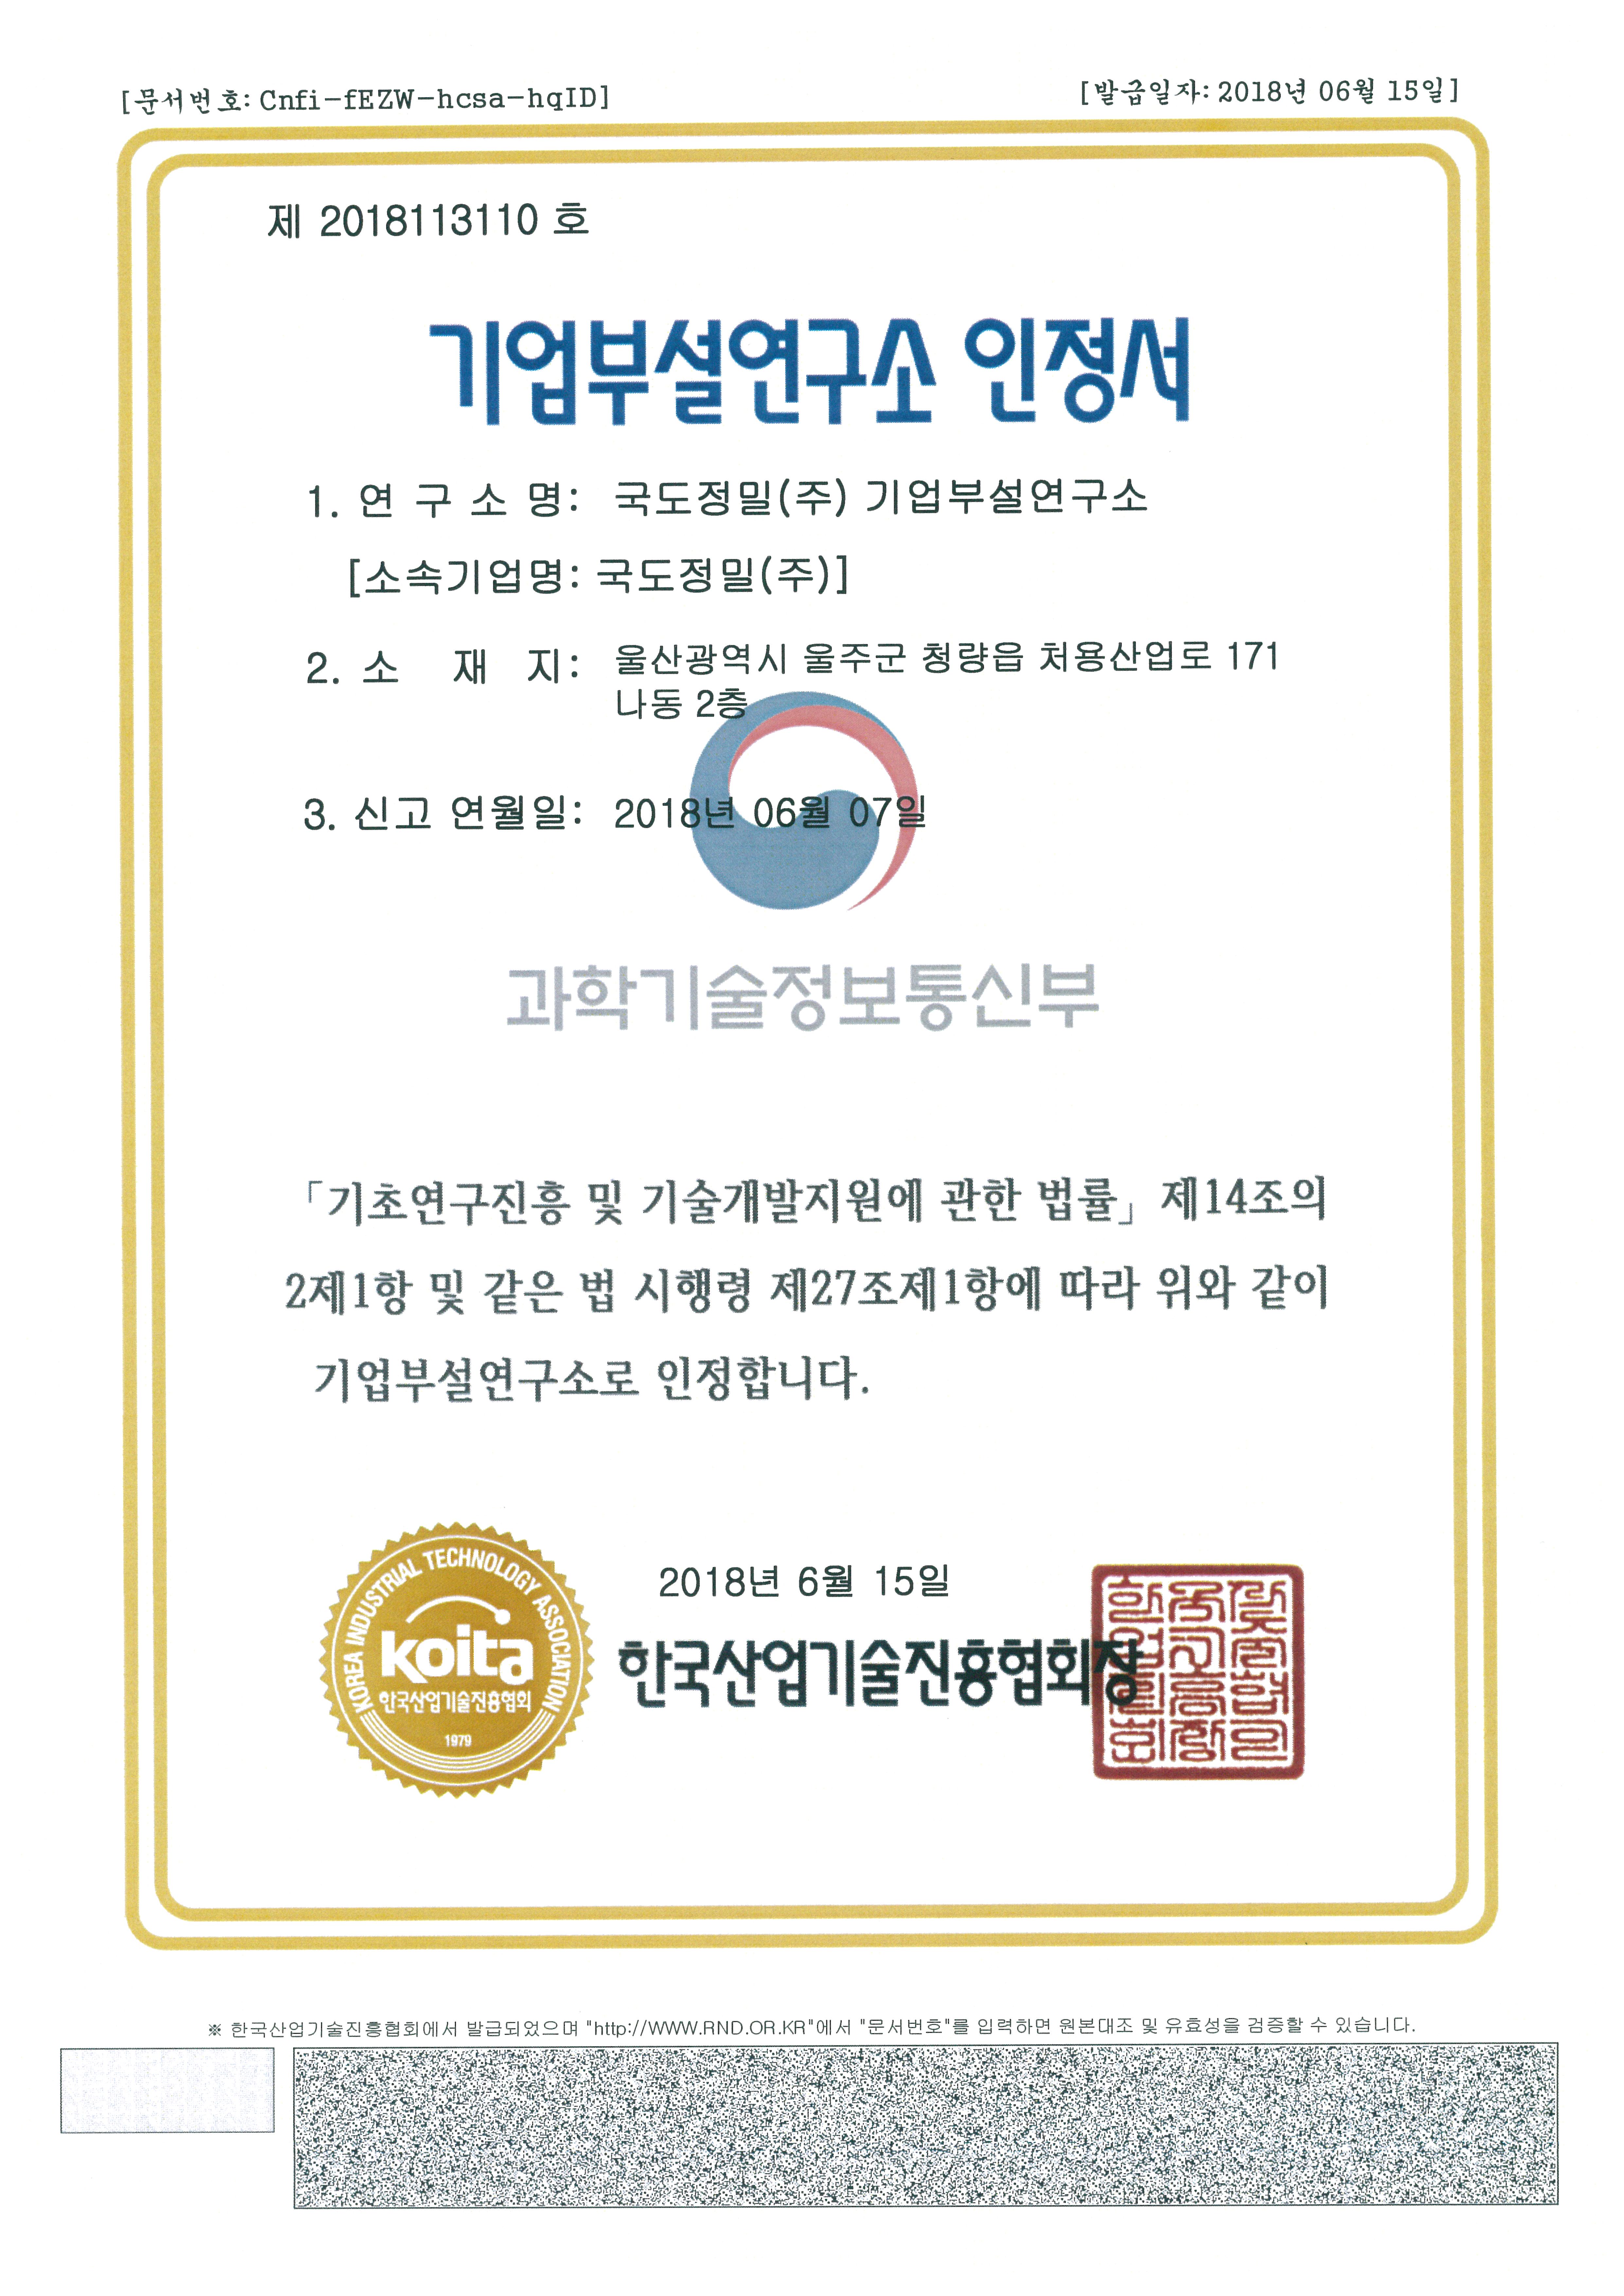 Certificate of Corporate R&D department - Kukdo Precision Co., Ltd.